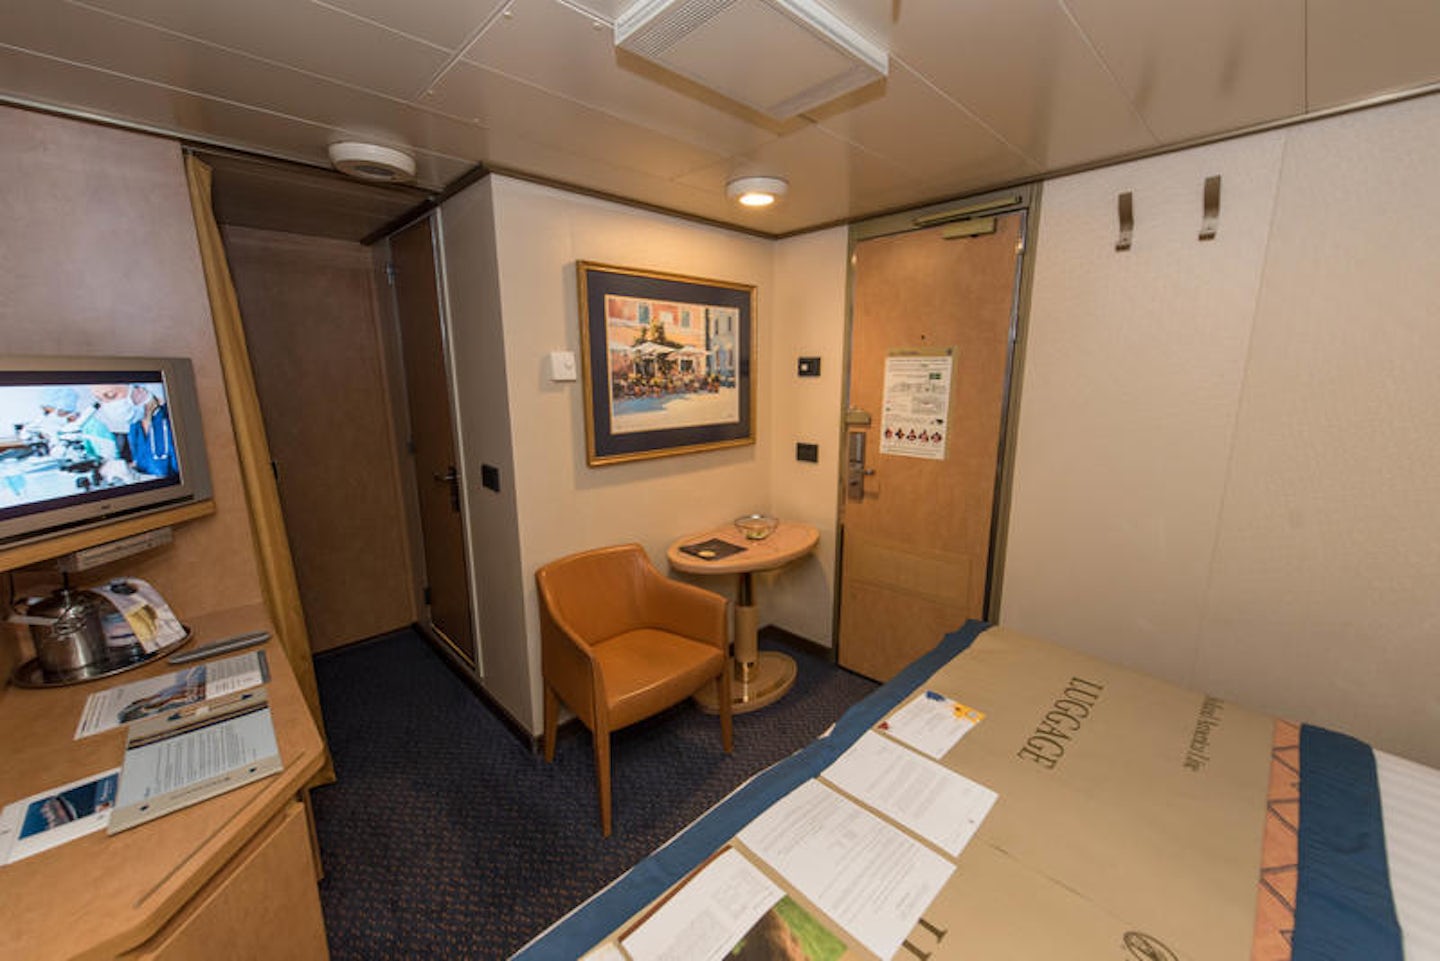 noordam cruise ship rooms